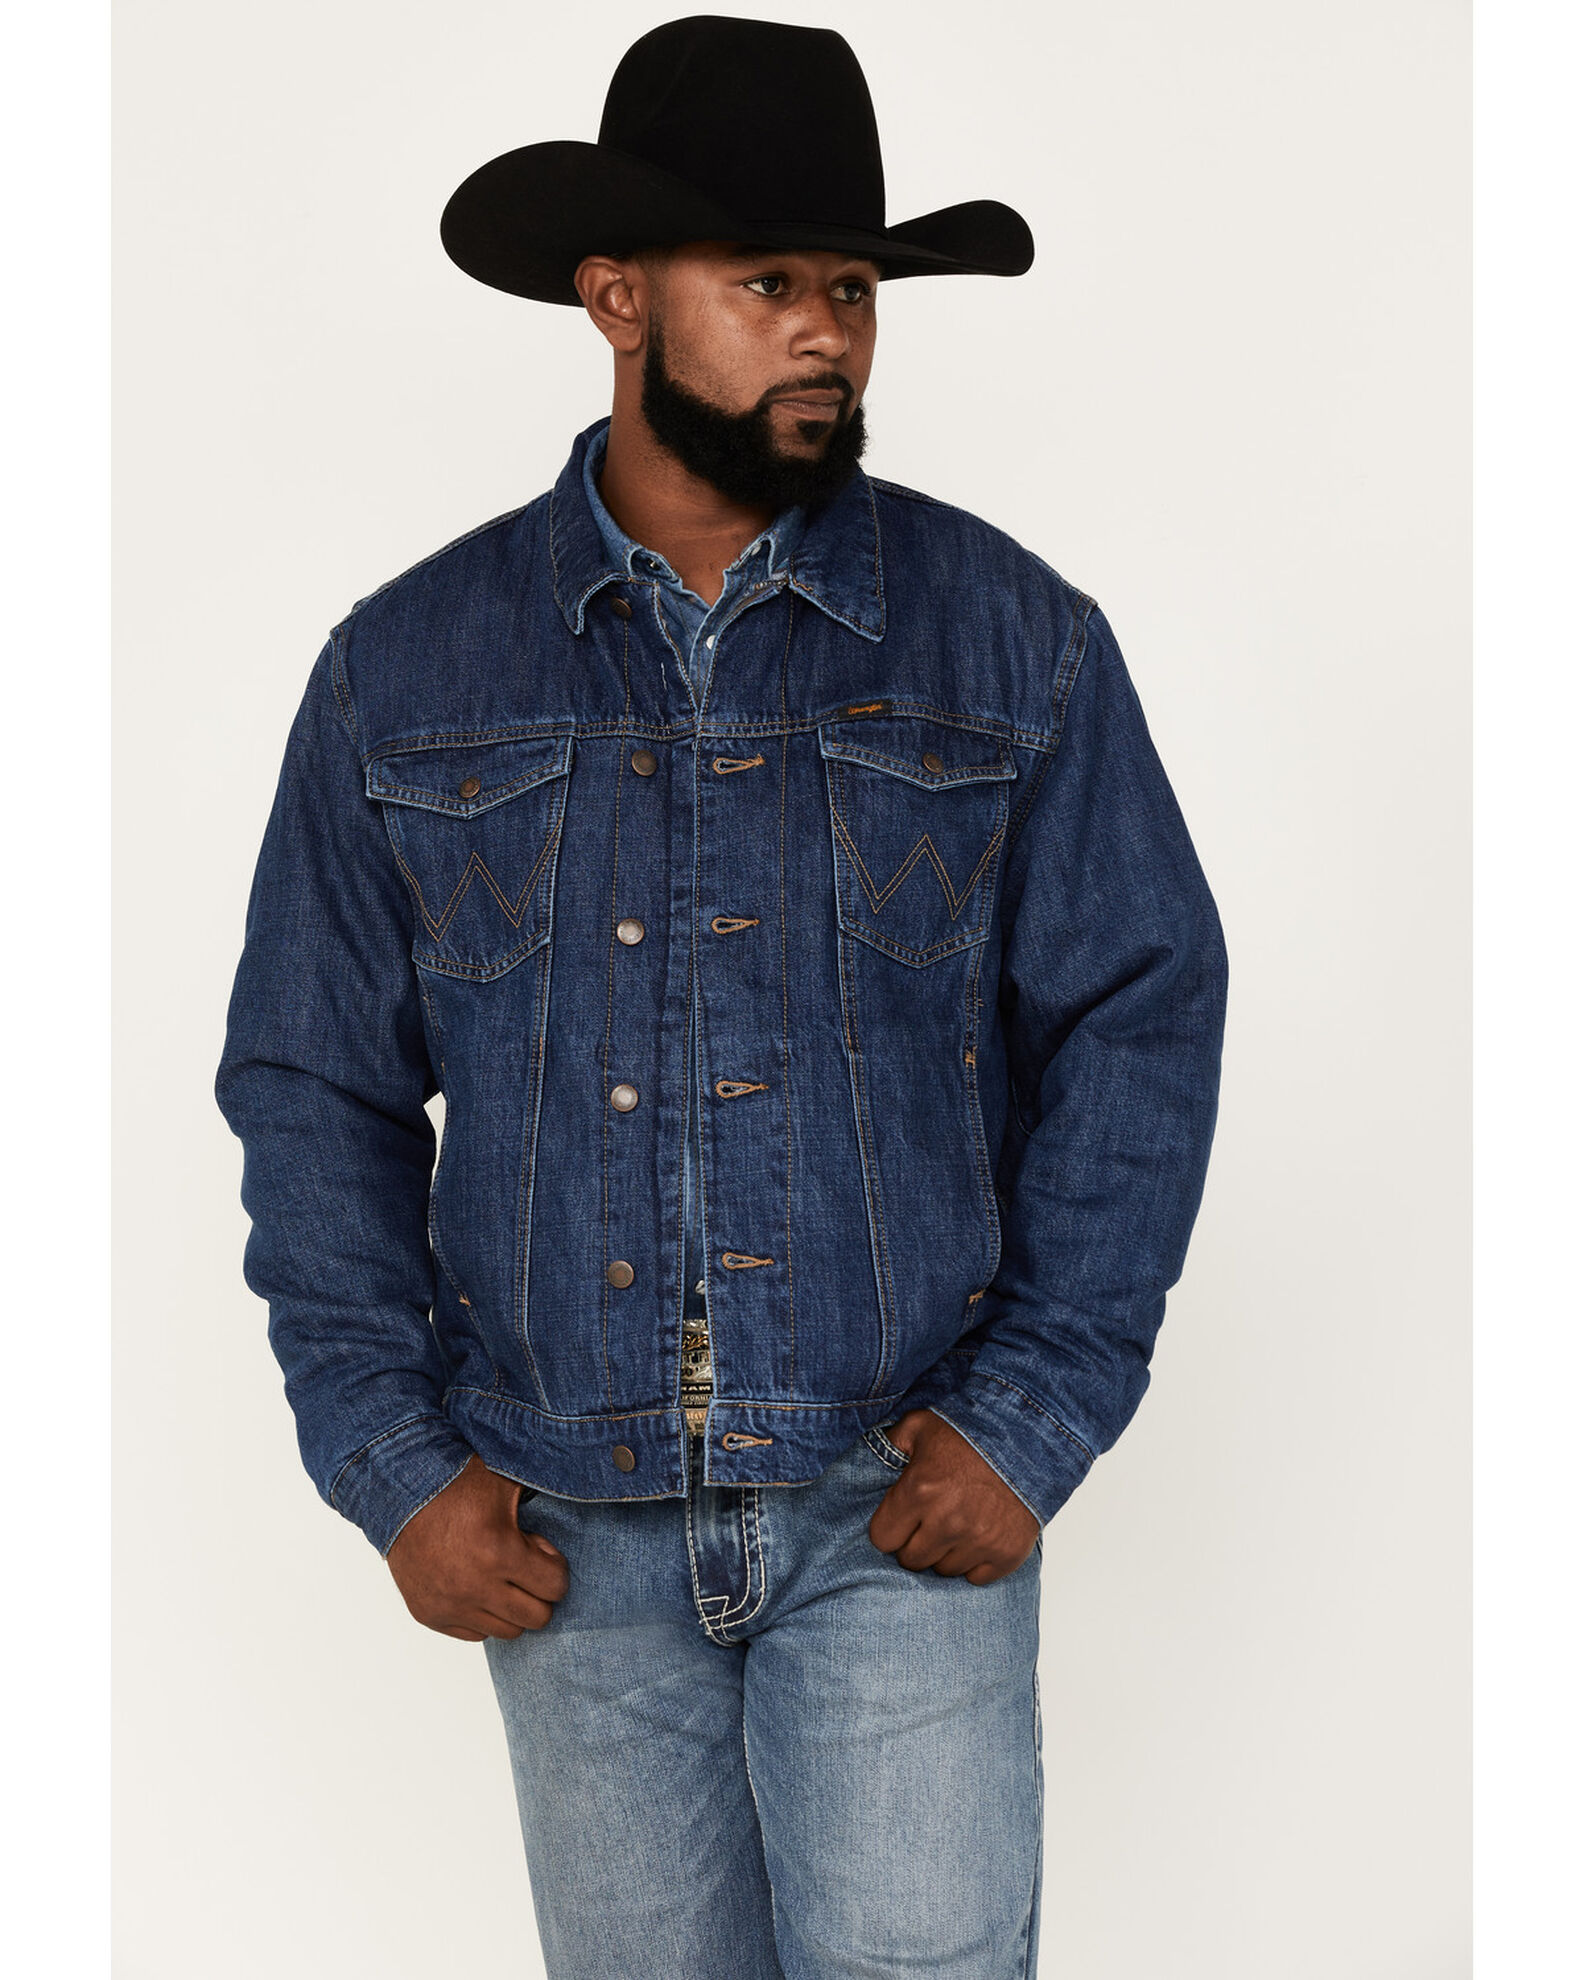 Wrangler Men's Blanket-Lined Solid Denim Jacket - Country Outfitter